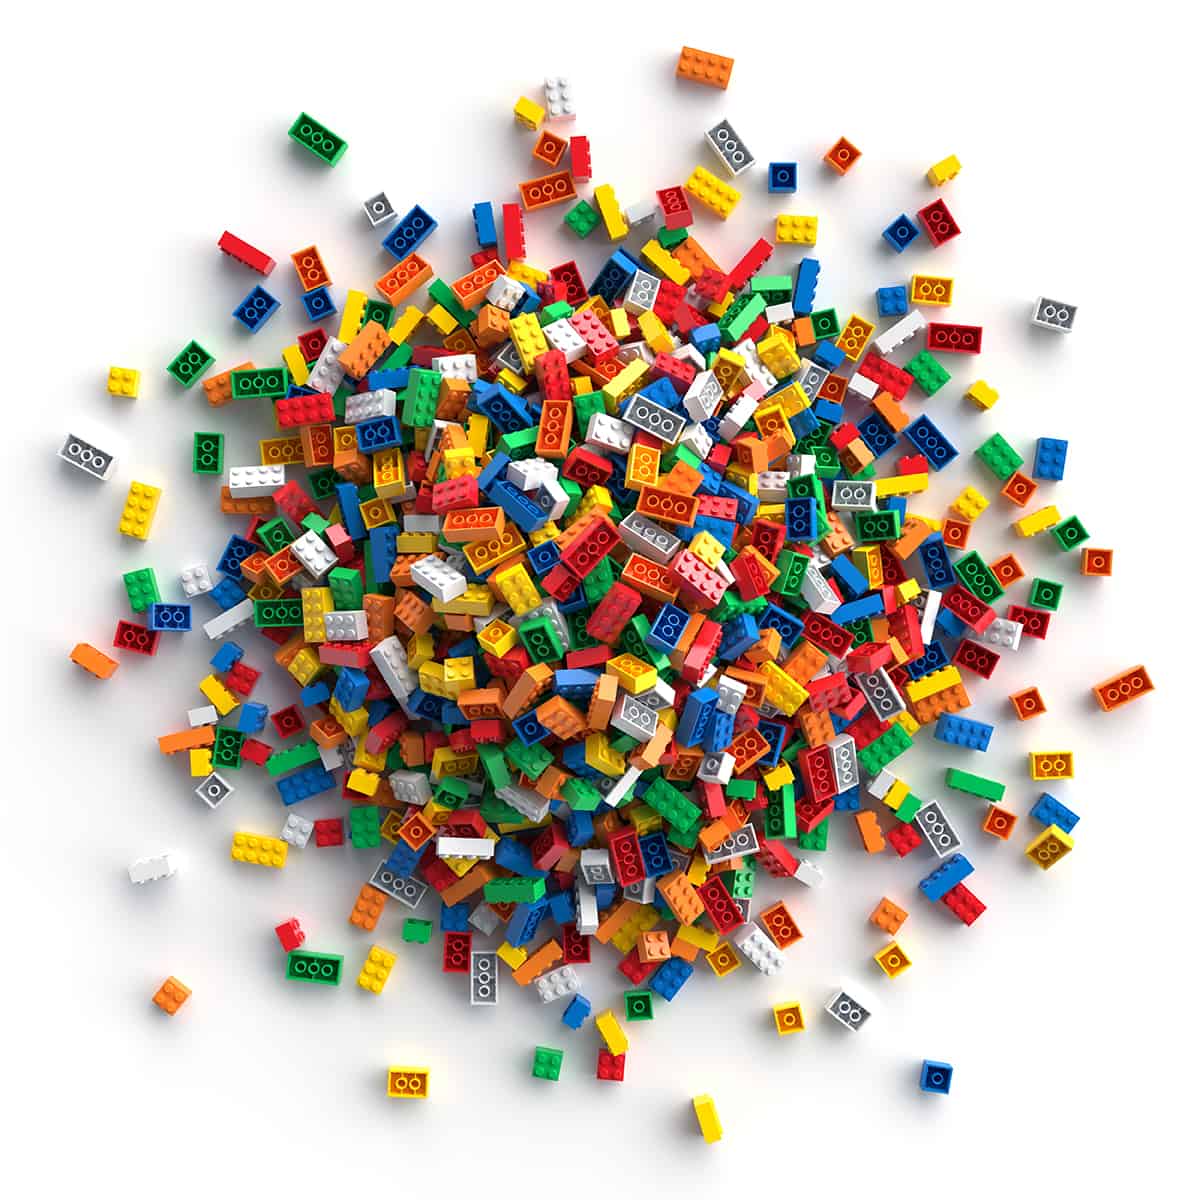 Types of Lego Bricks